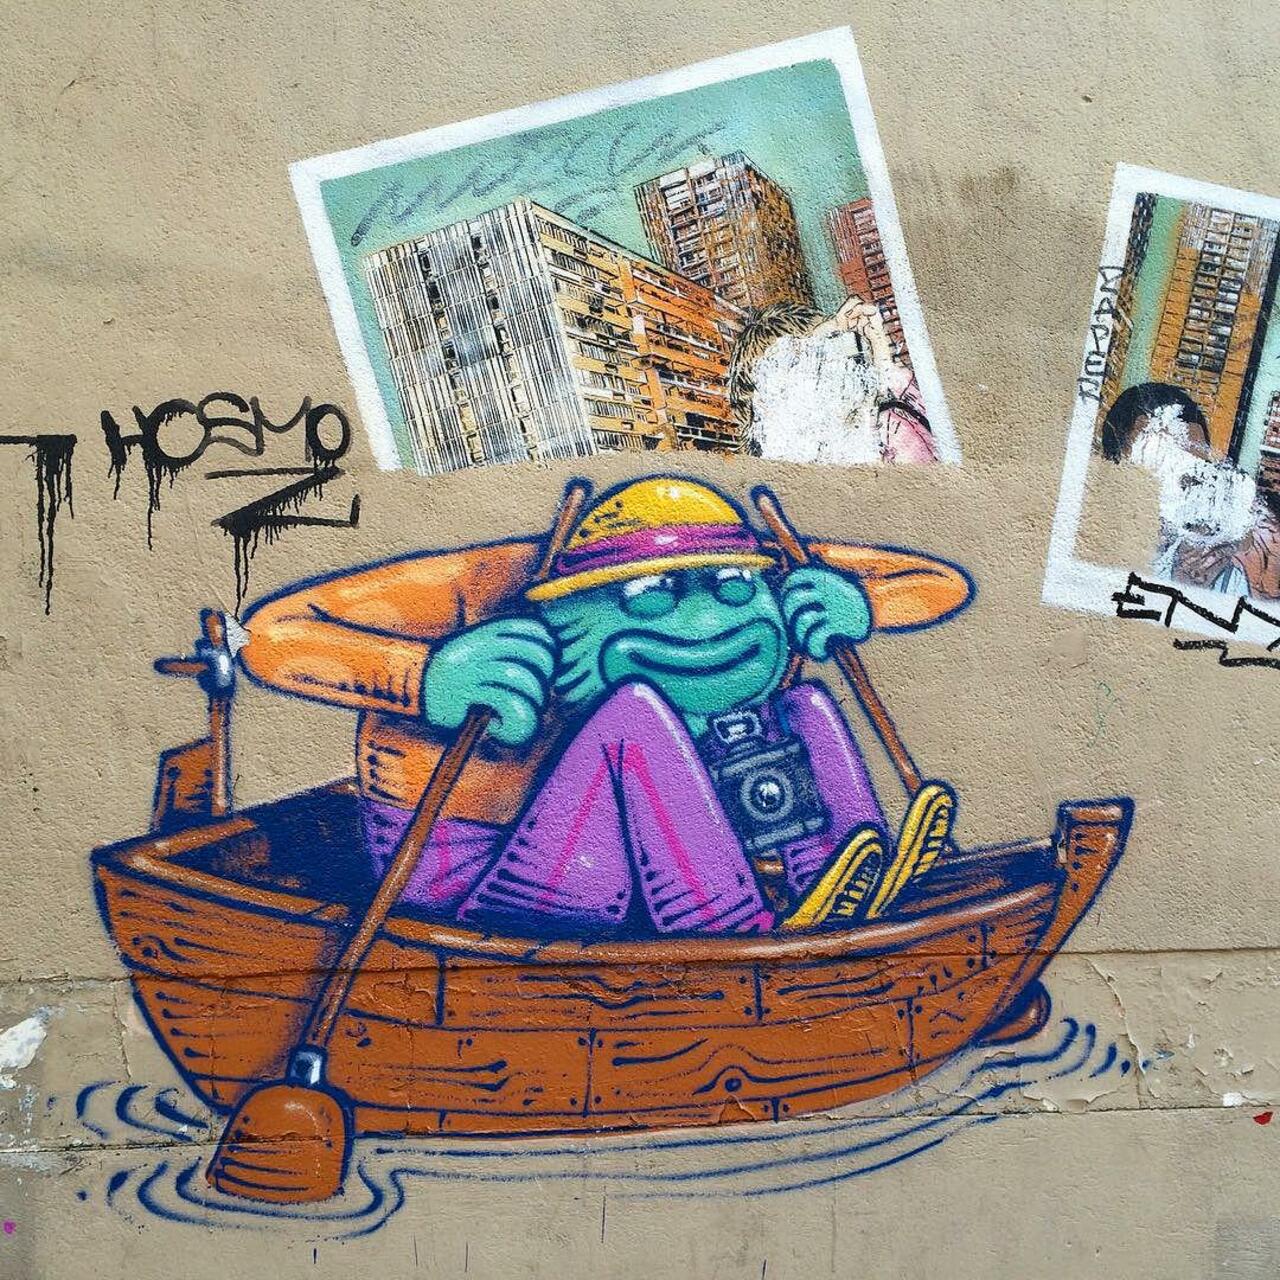 #Paris #graffiti photo by @benapix http://ift.tt/1MiCuTZ #StreetArt http://t.co/MXEb3CvtqL